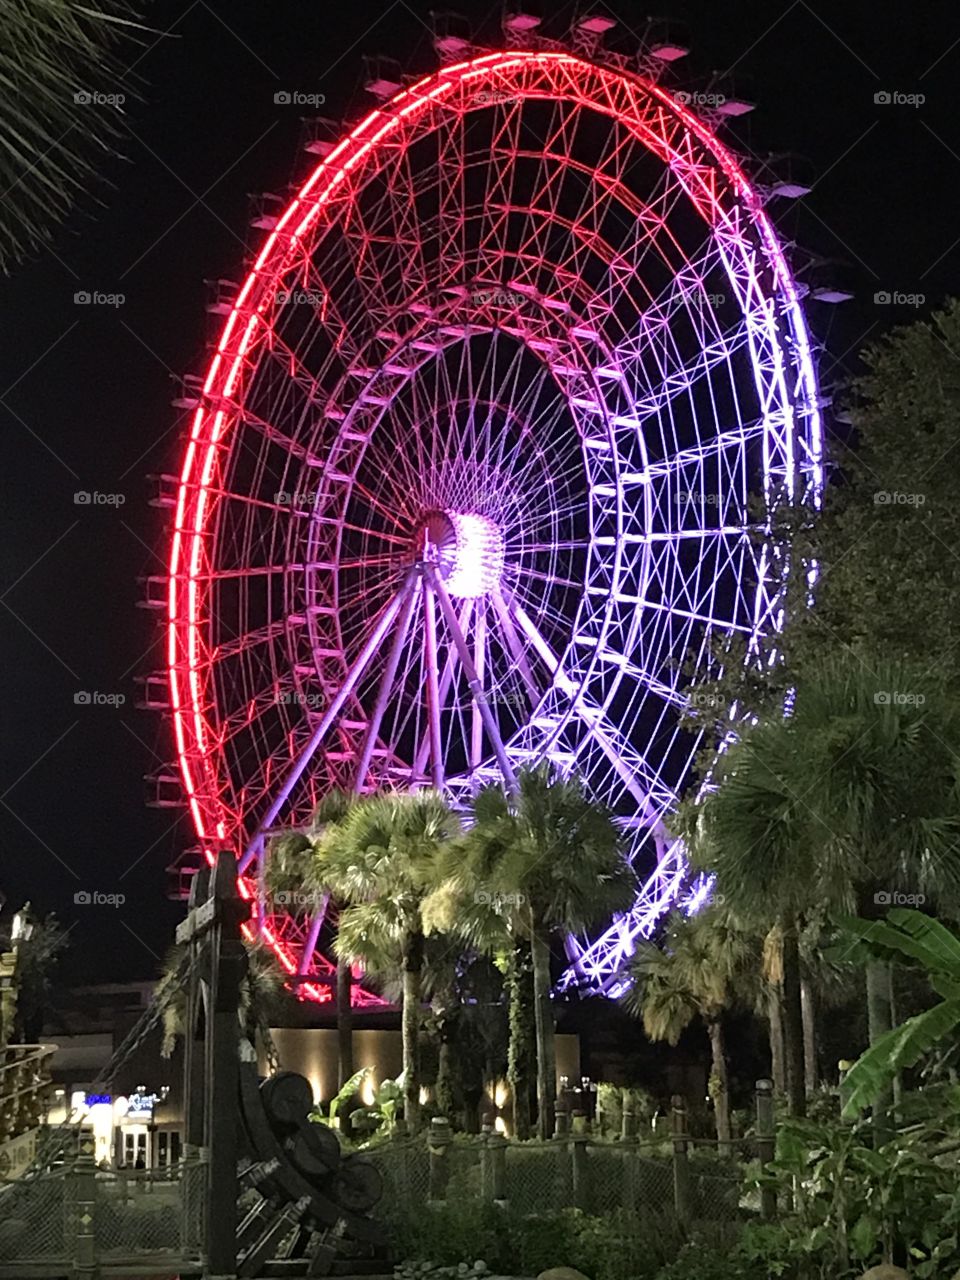 Red and purple ferris wheel